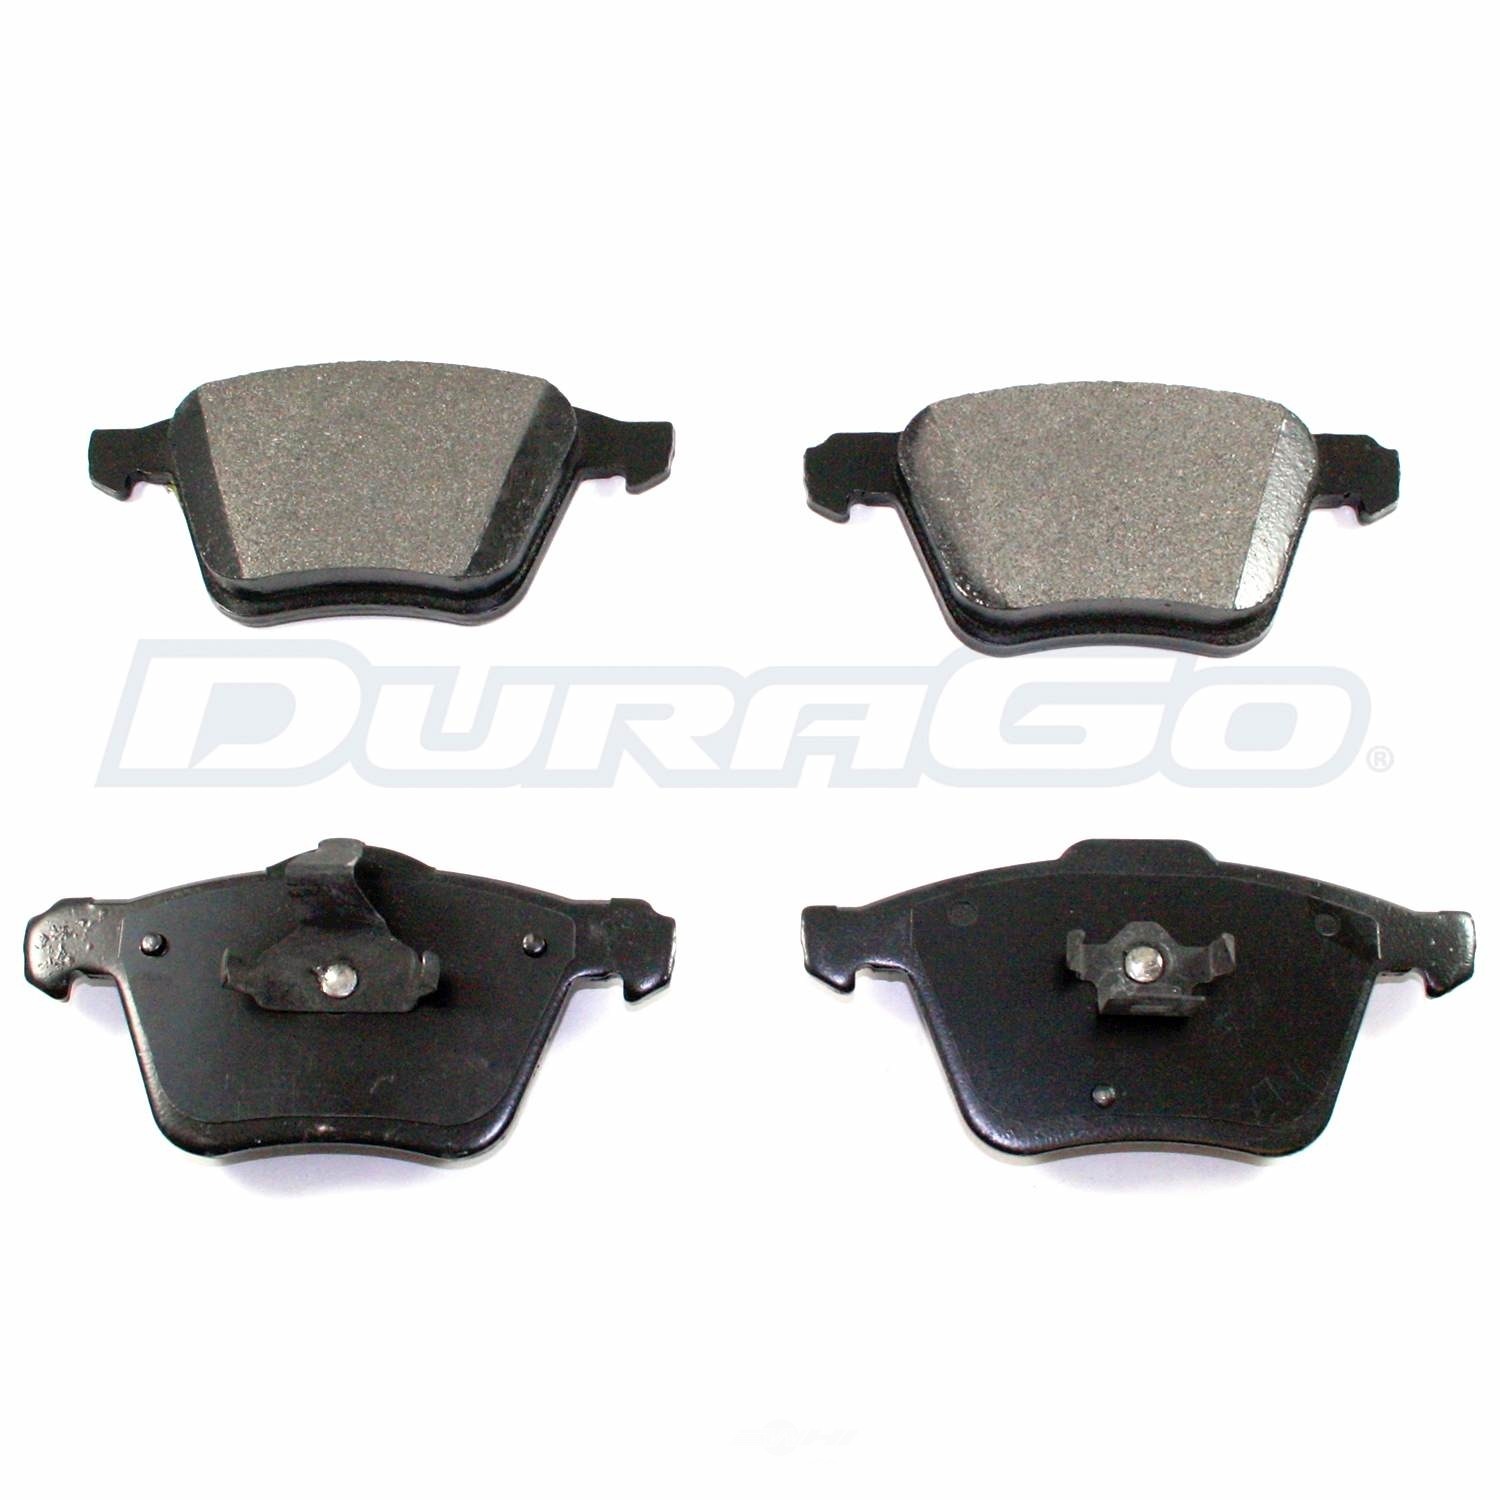 DURAGO - Disc Brake Pad (Front) - D48 BP1003MS